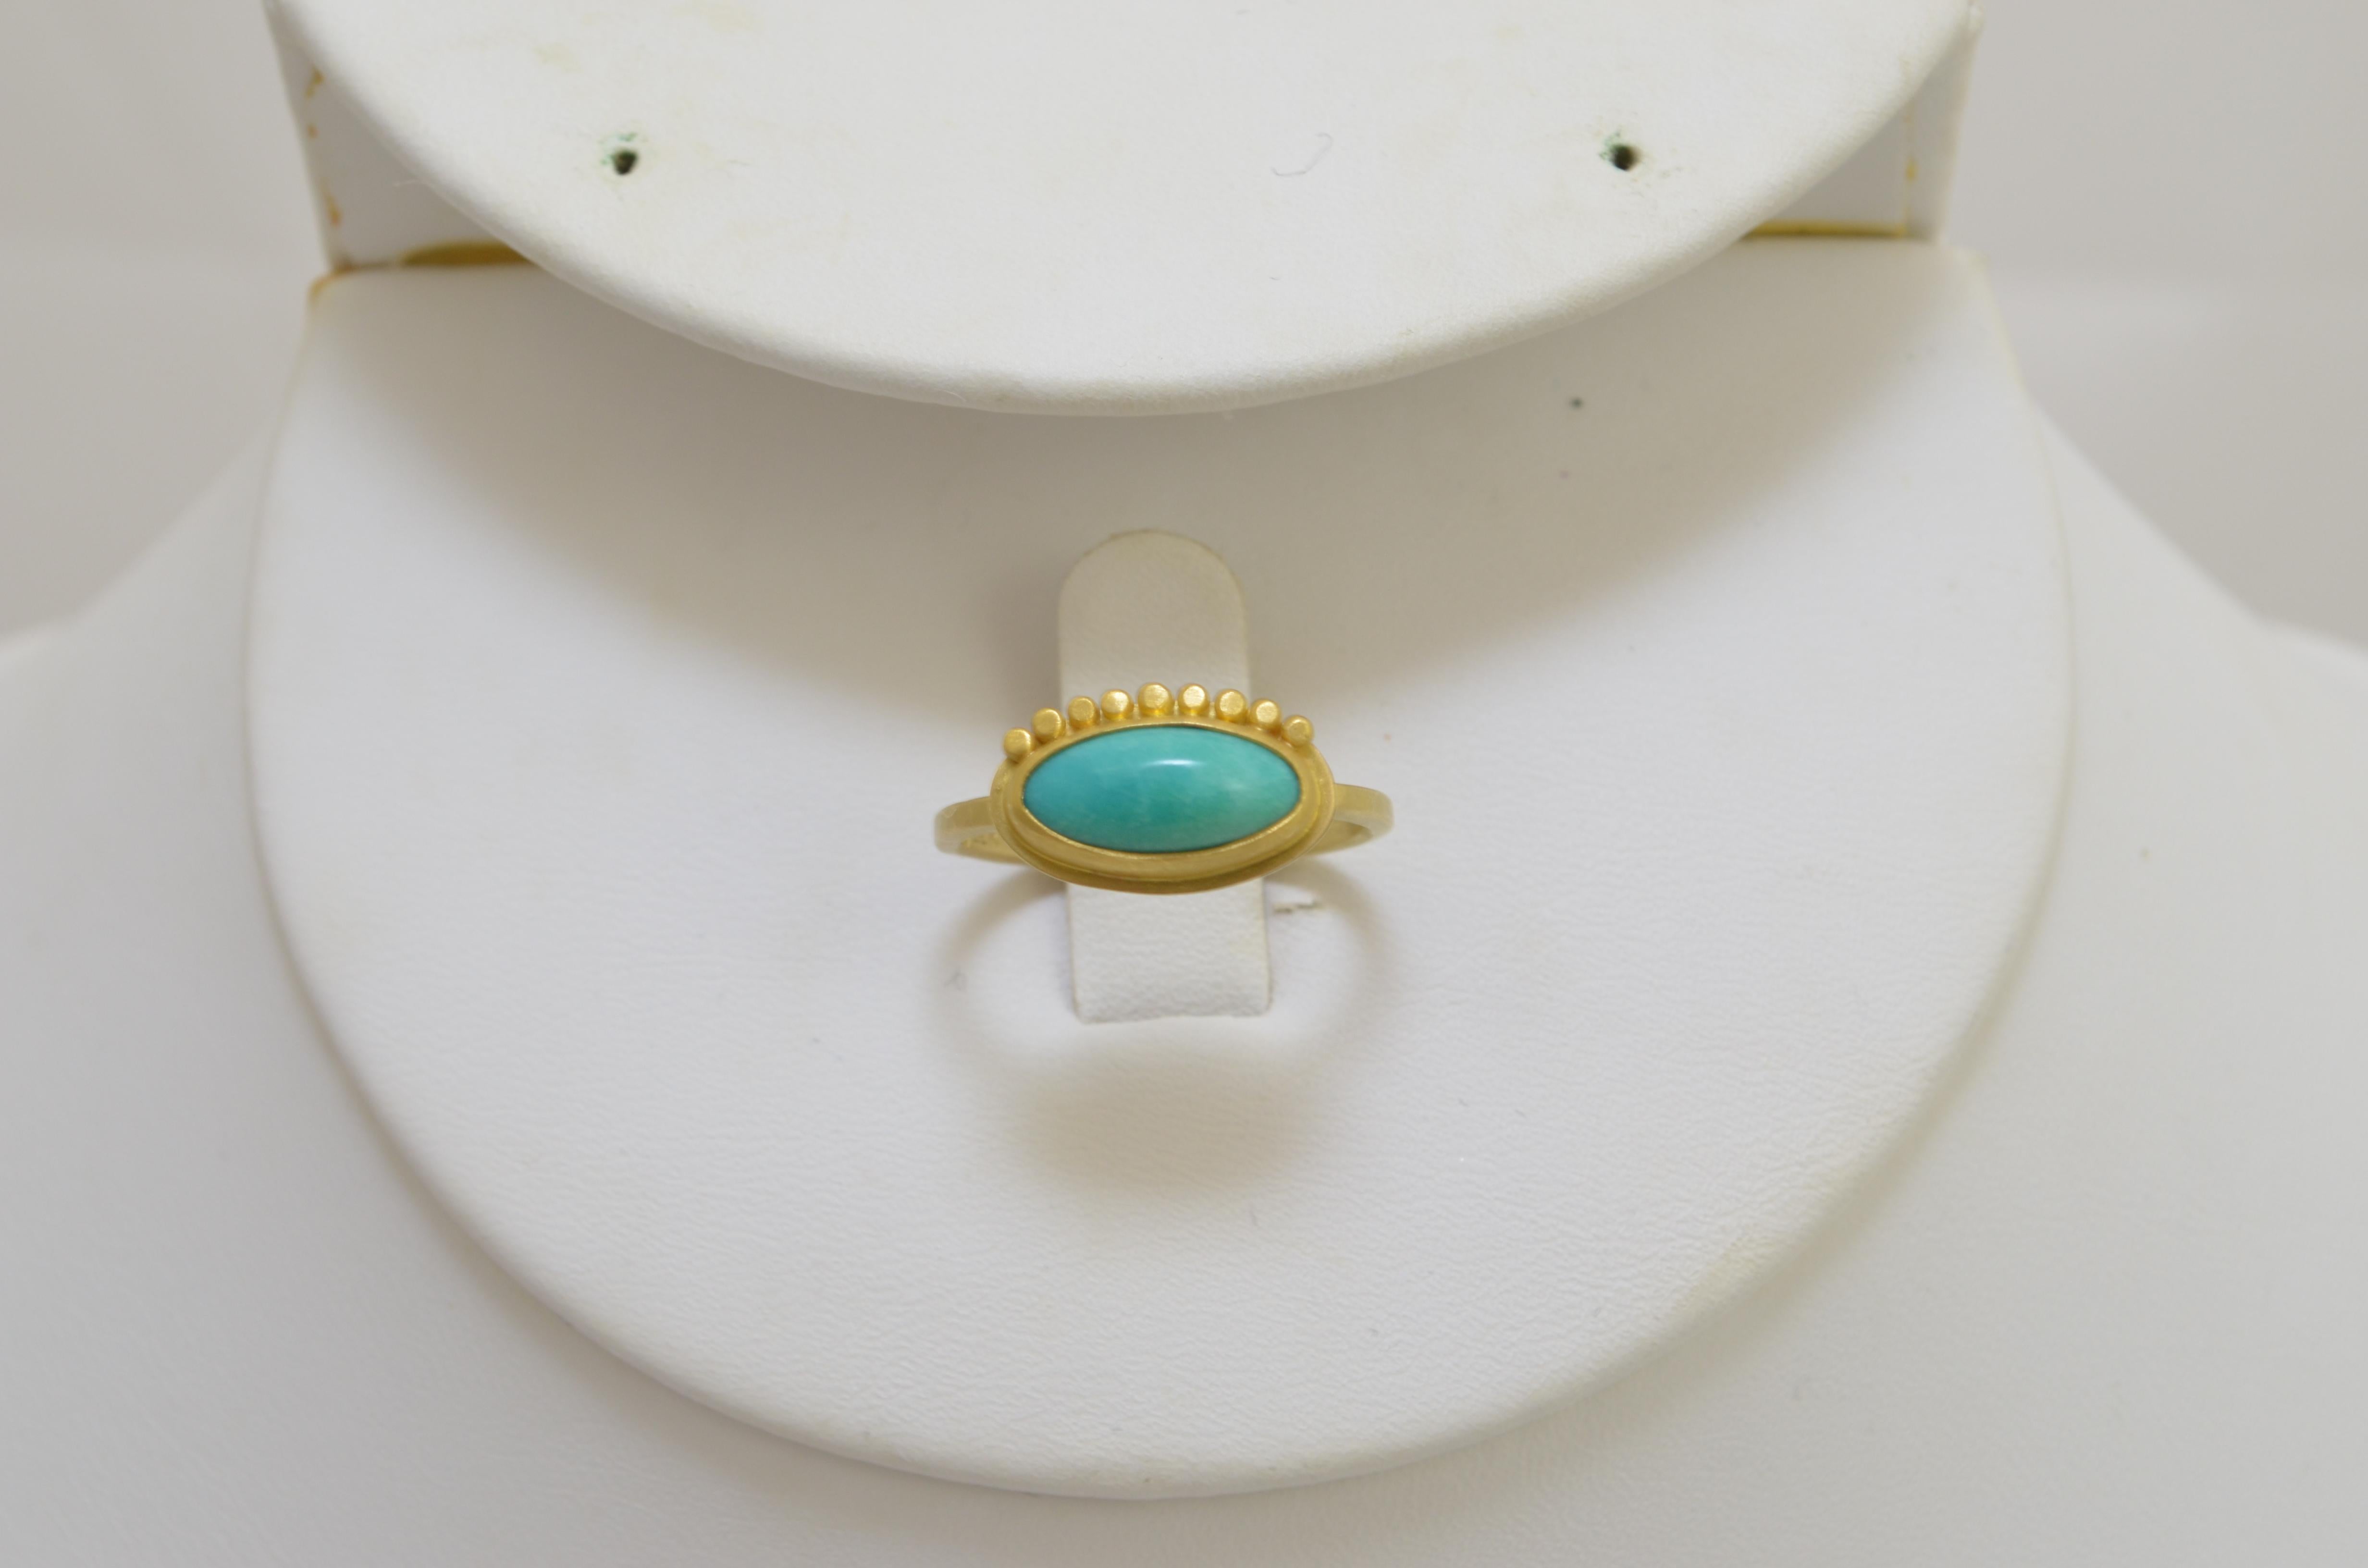 Ananda Khalsa 22k Gold Evil Eye Ring with Turquoise — Size 7 ring with a turquoise “evil eye” at the center. Ring stamped “22k 18k” and designer marking.